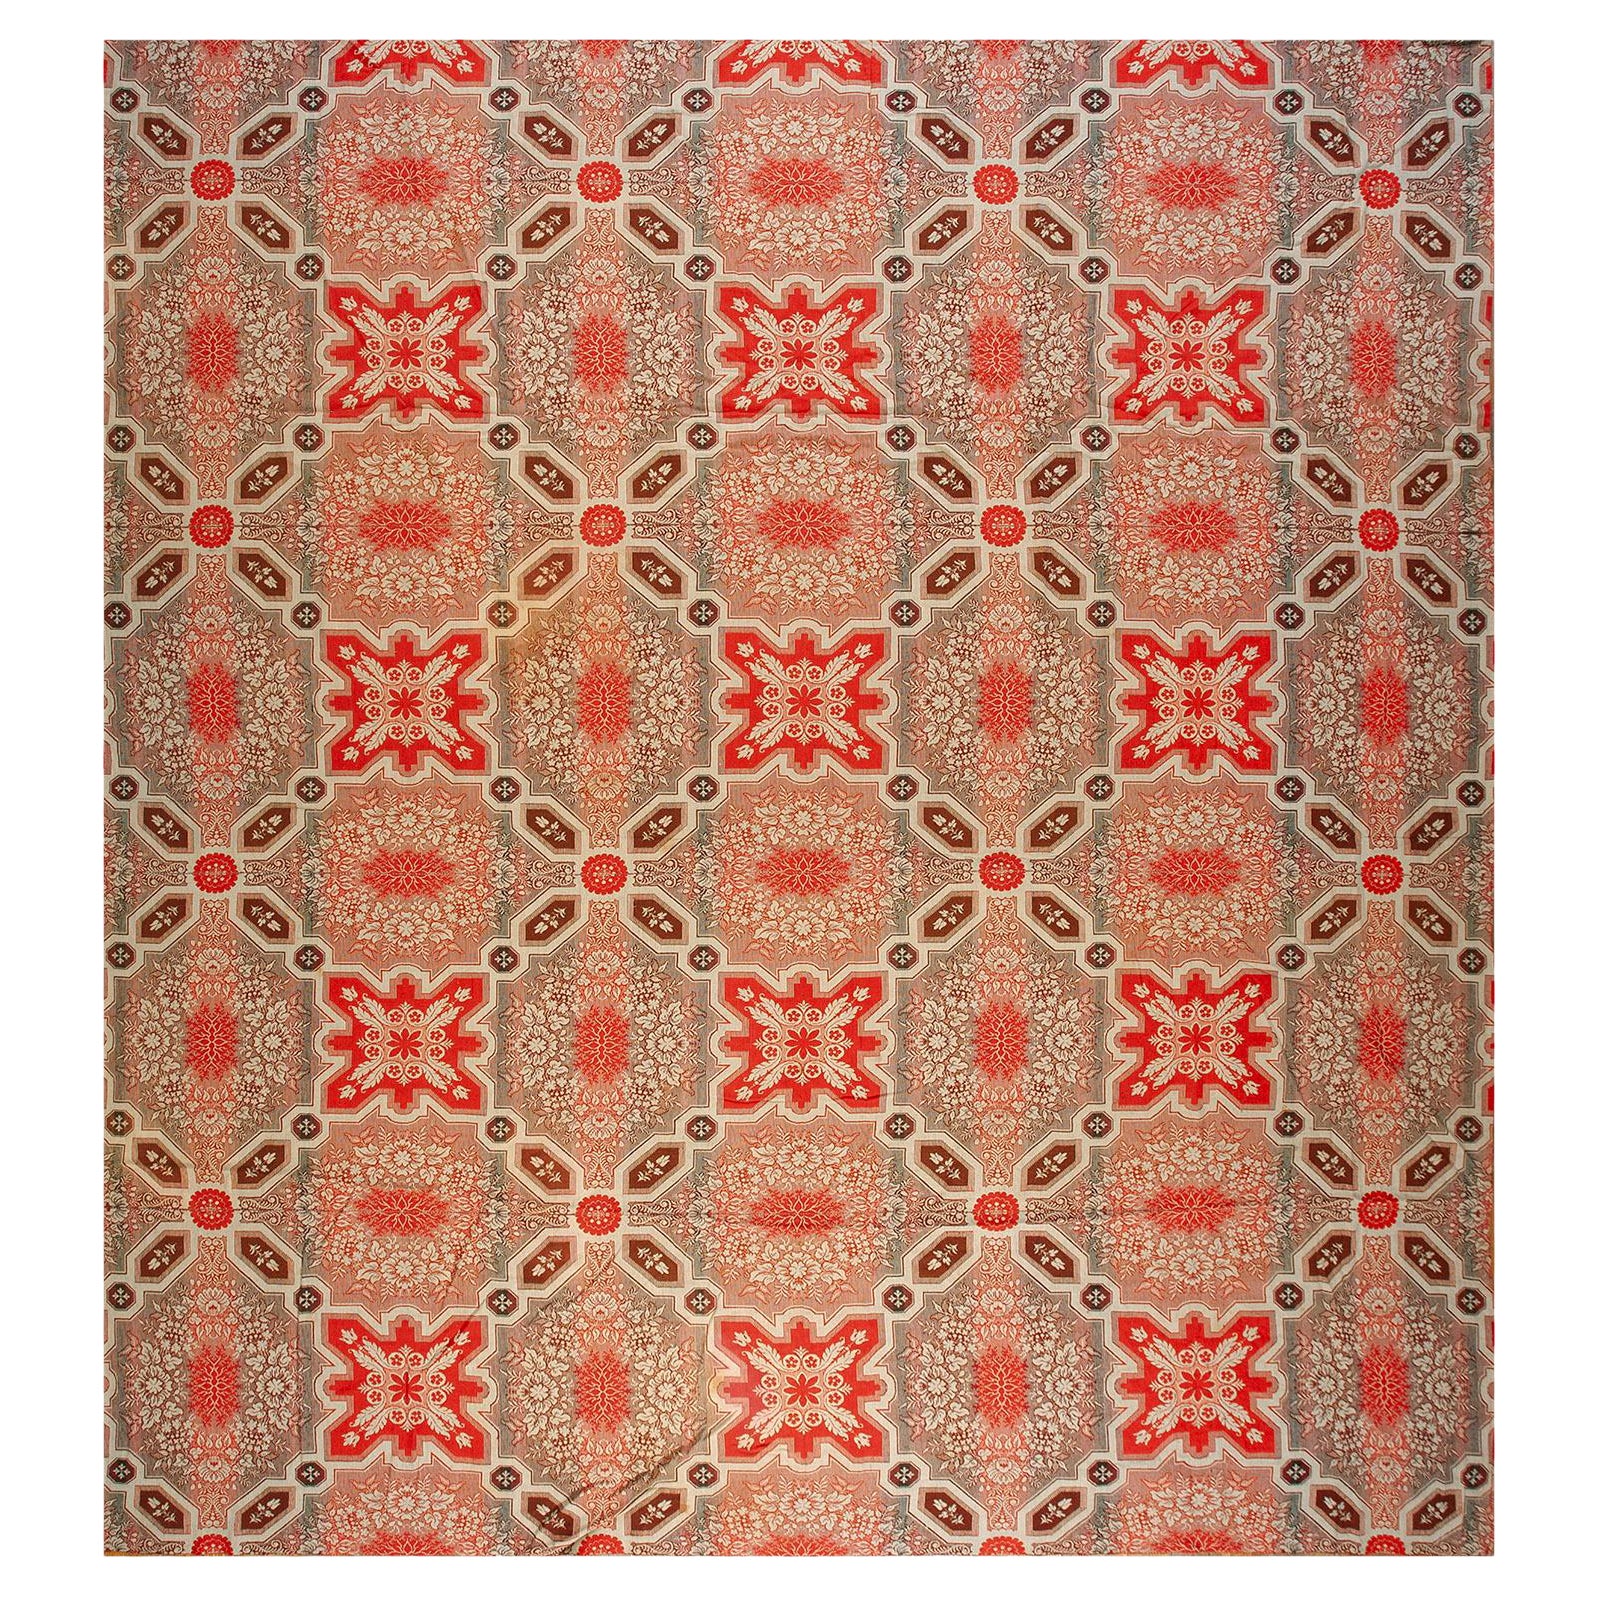 Mid 19th Century American Ingrain Carpet ( 12' 6" x 13' 4"  - 381 x 406 cm ) For Sale